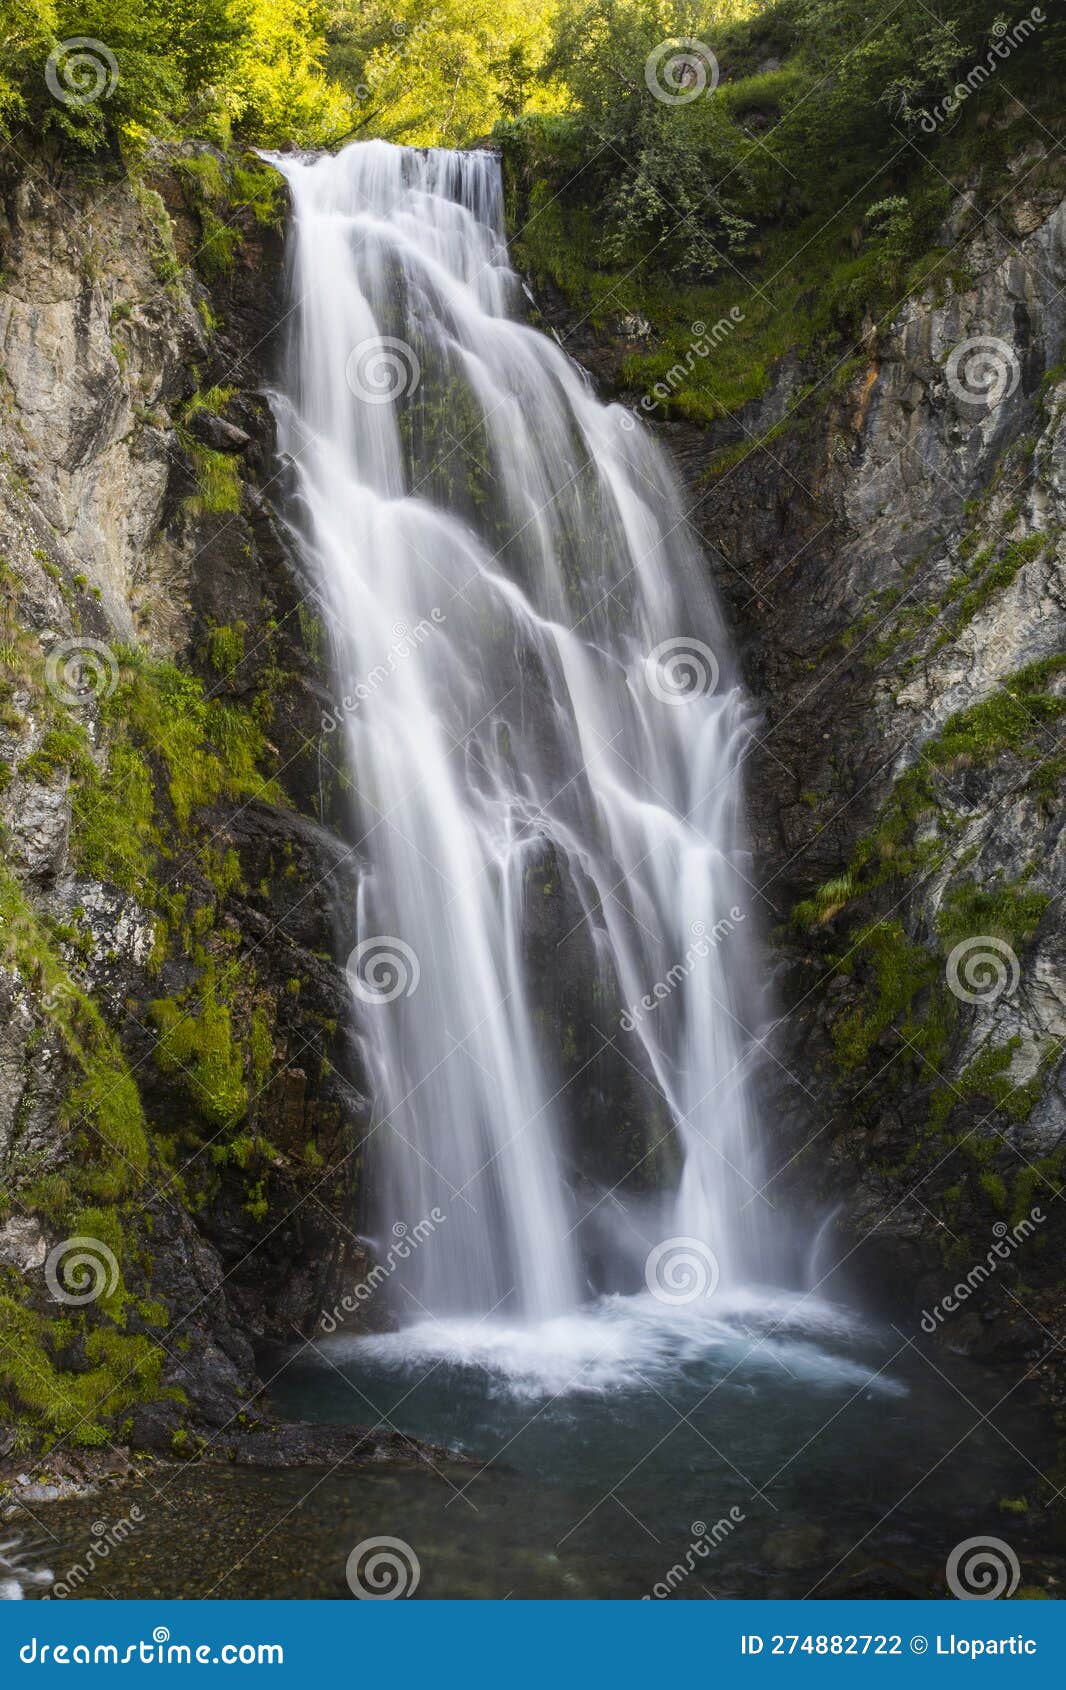 summer in sauth deth pish waterfall, val d aran, spain